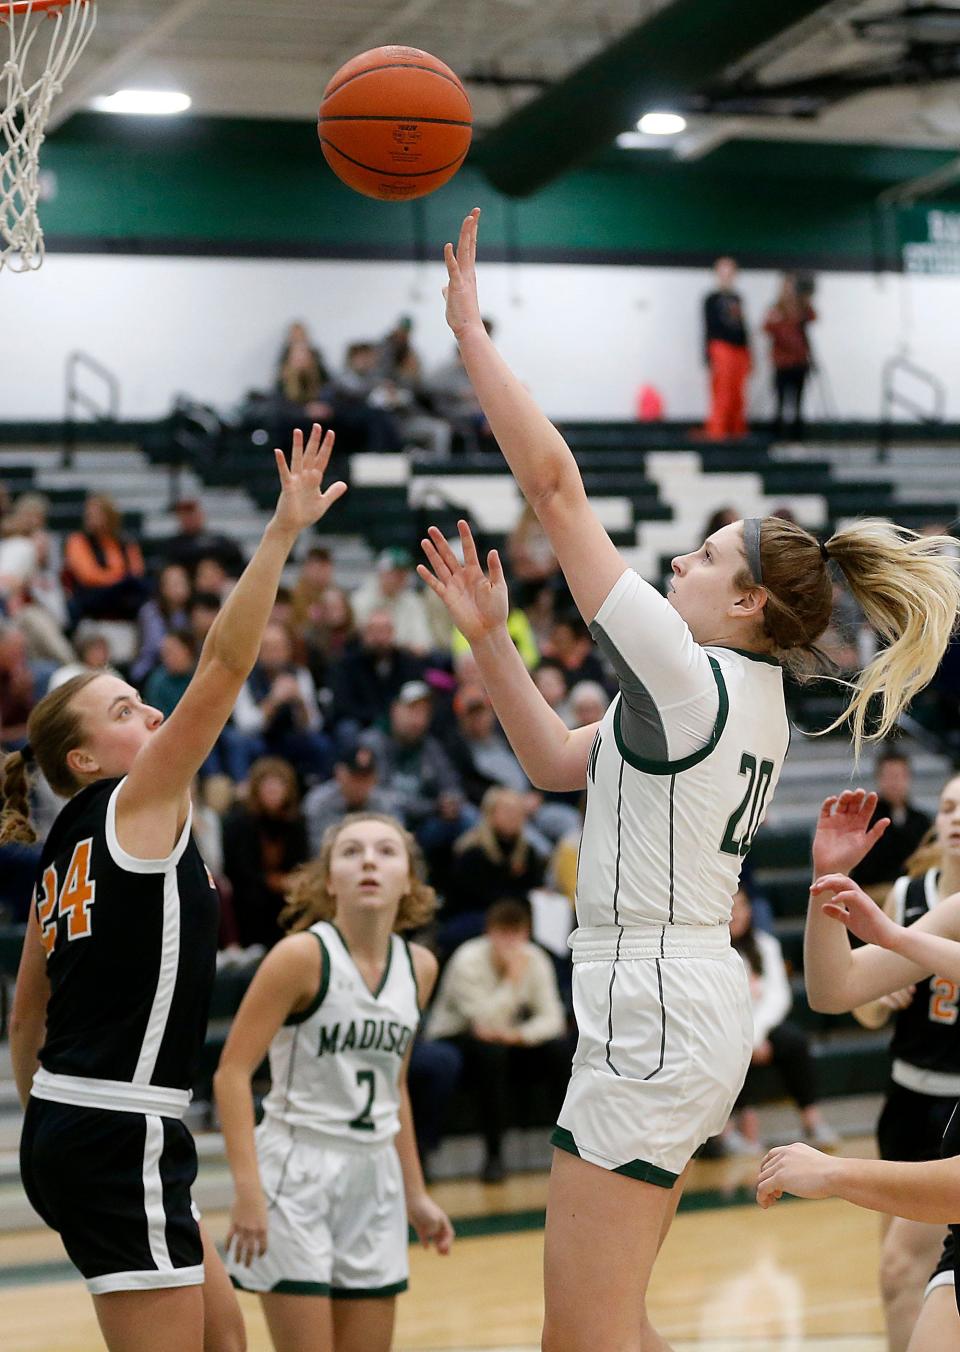 Madison High School's Chloe Ebeling (20) puts up a shot over Ashland High School's Audra McBride (24) during high school girls basketball at Madison on Thursday, Jan. 12, 2023. TOM E. PUSKAR/ASHLAND TIMES-GAZETTE